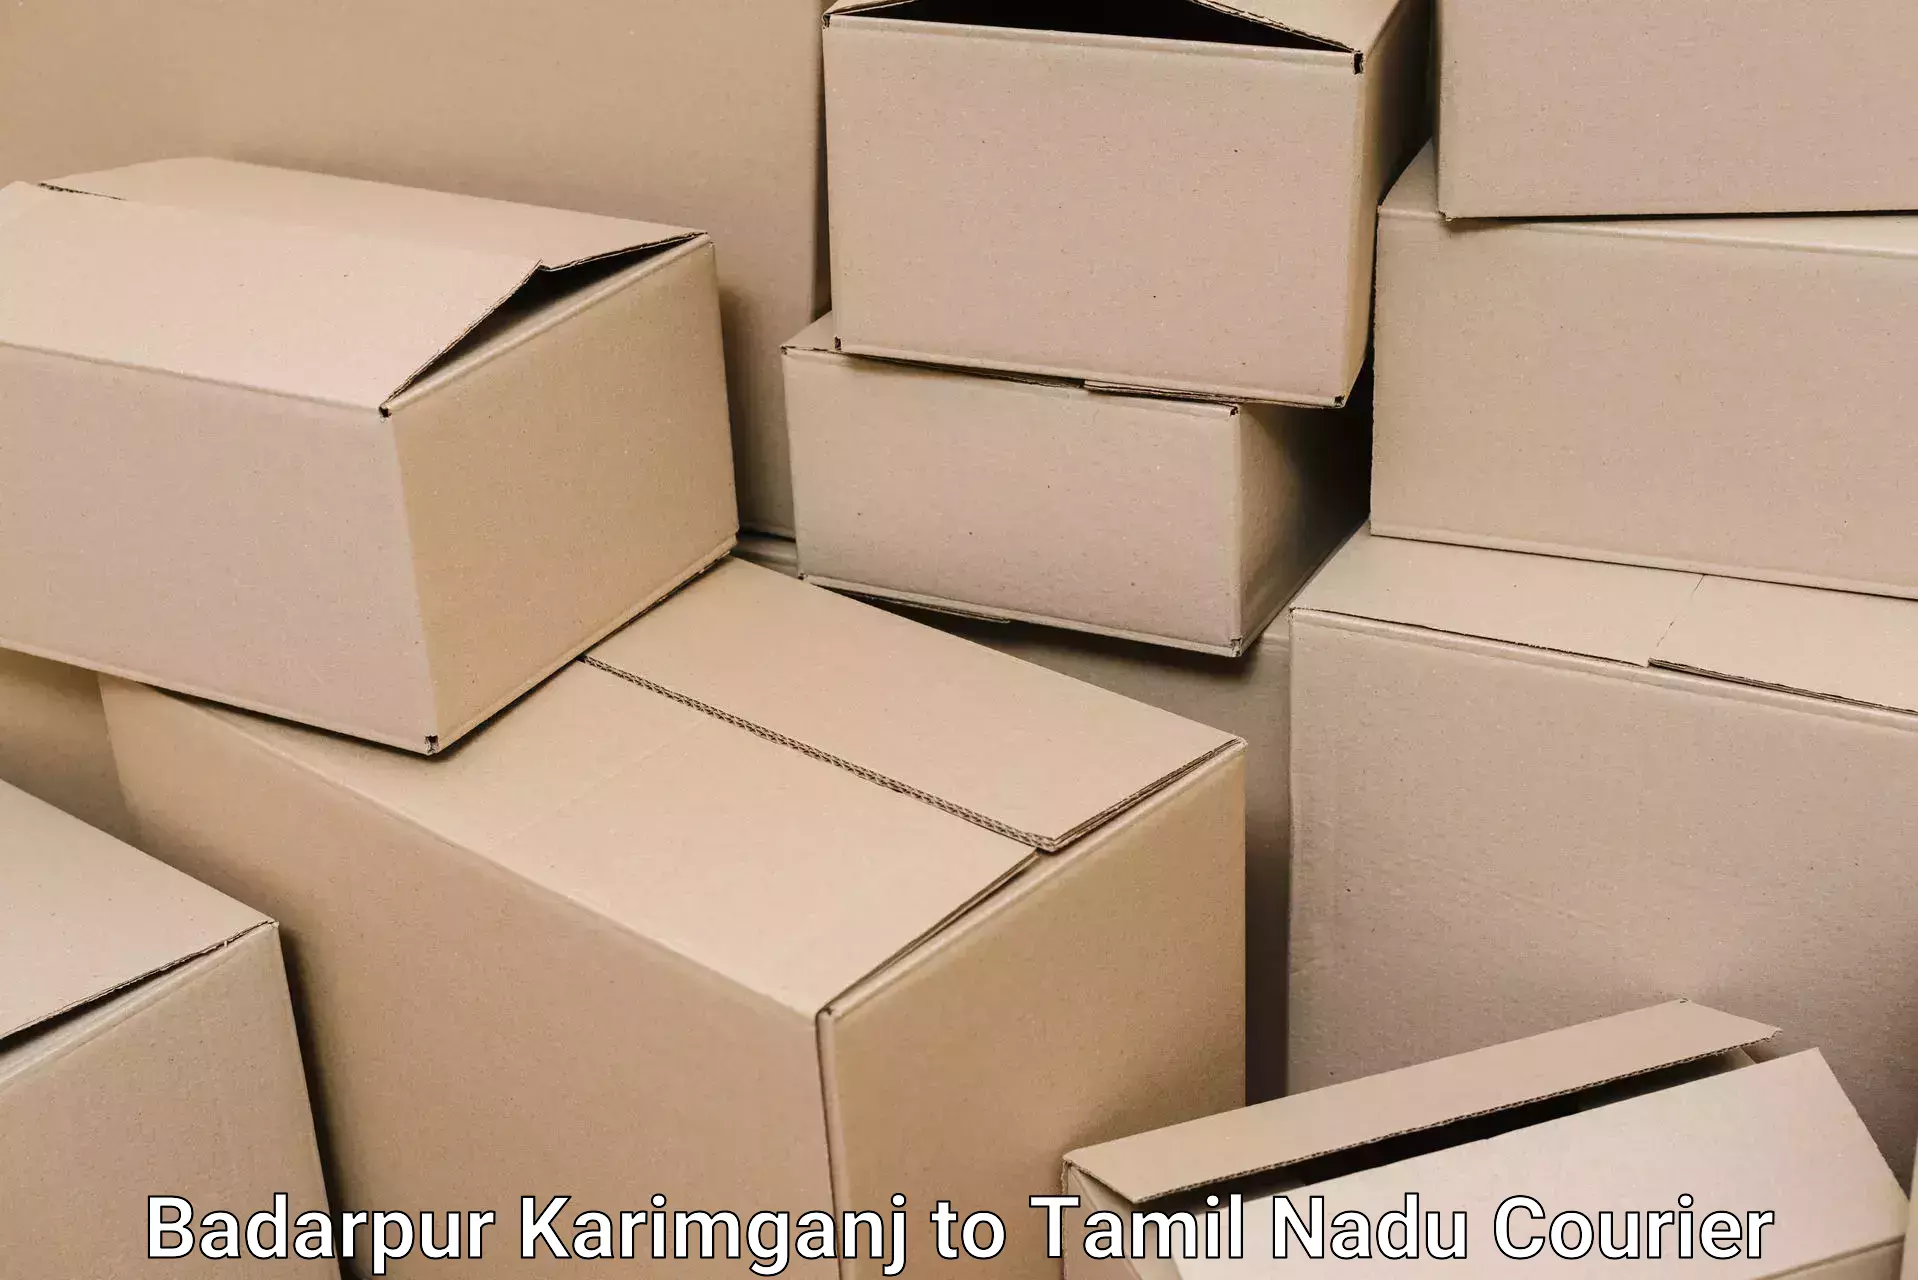 Moving and storage services Badarpur Karimganj to Gobichettipalayam